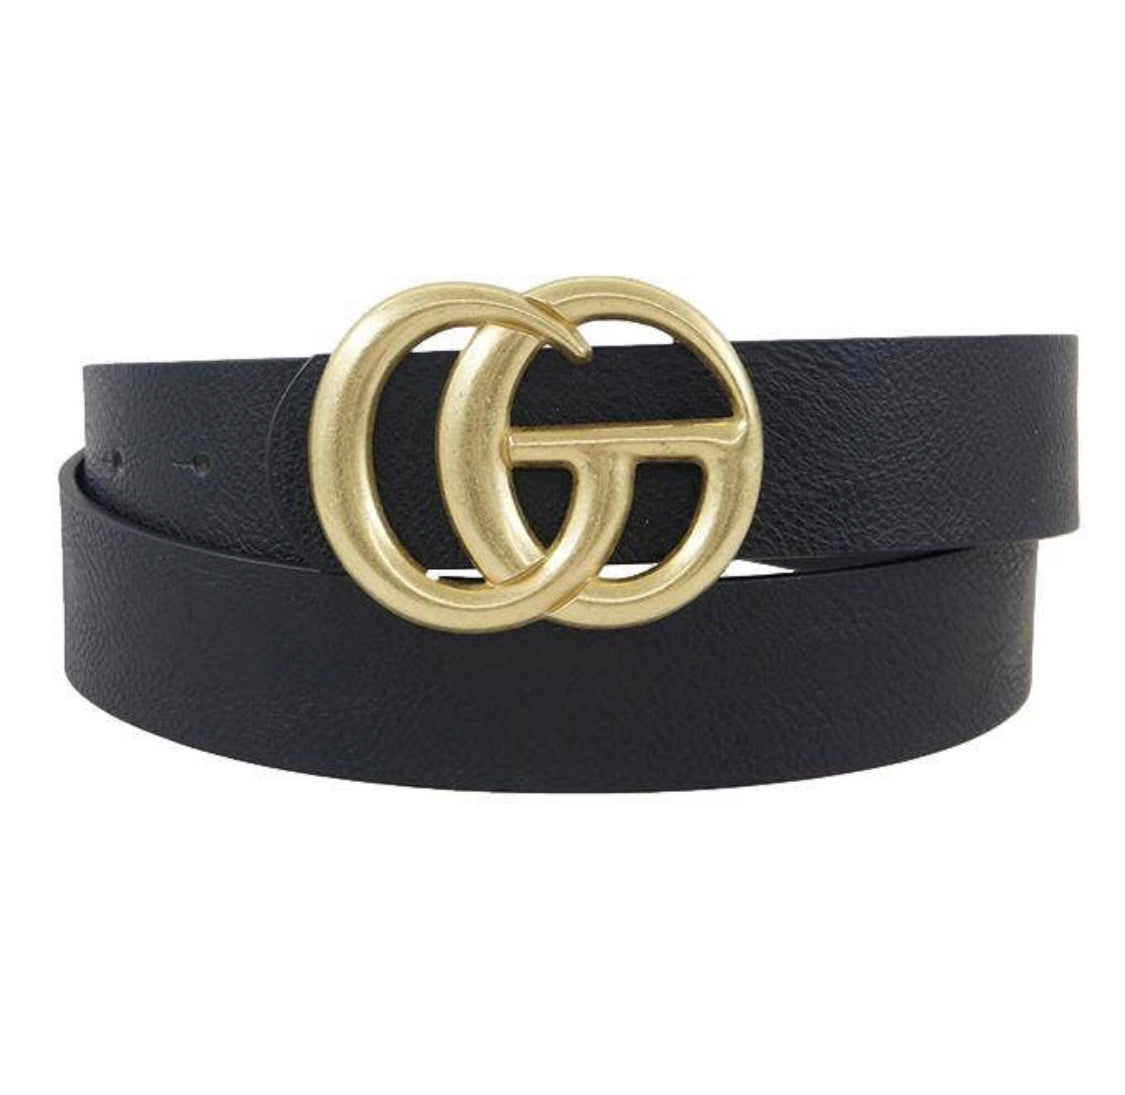 CG Gucci Inspired Belt